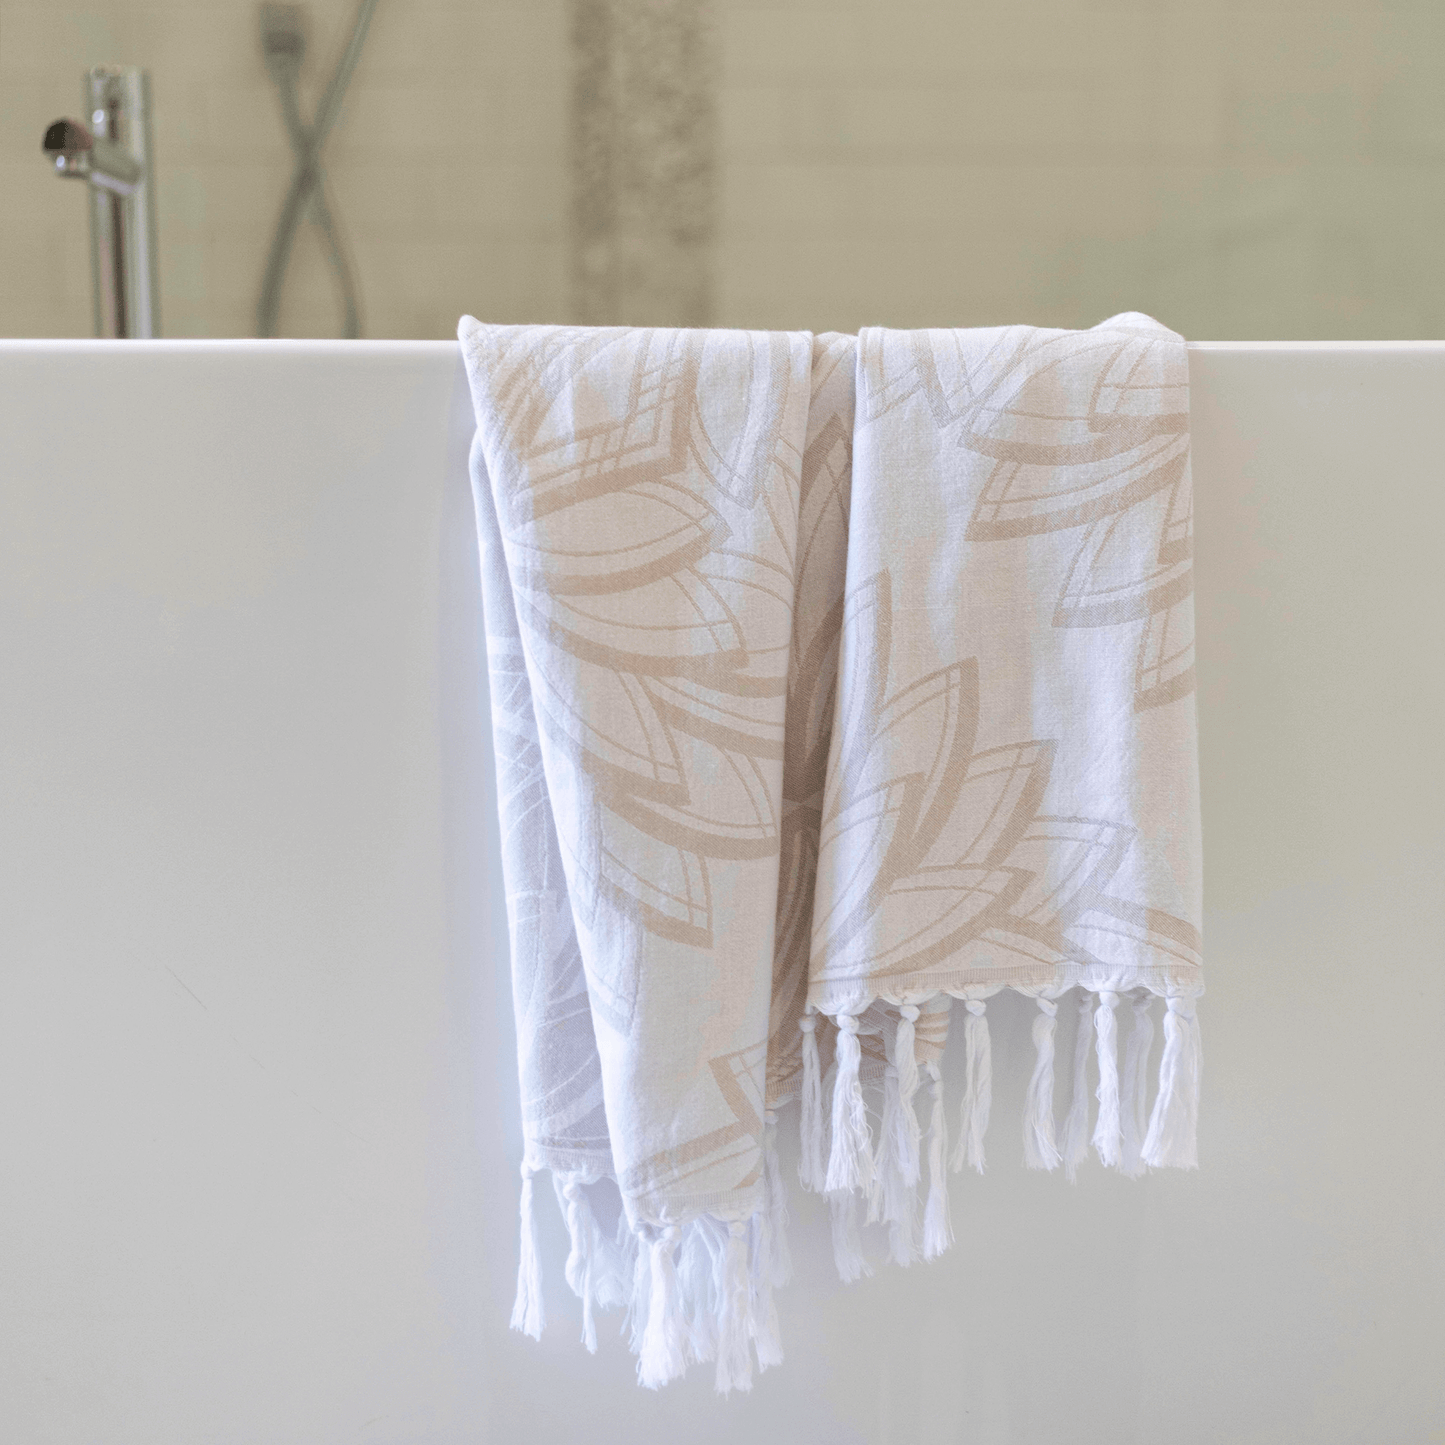 Turkish towel at the bath